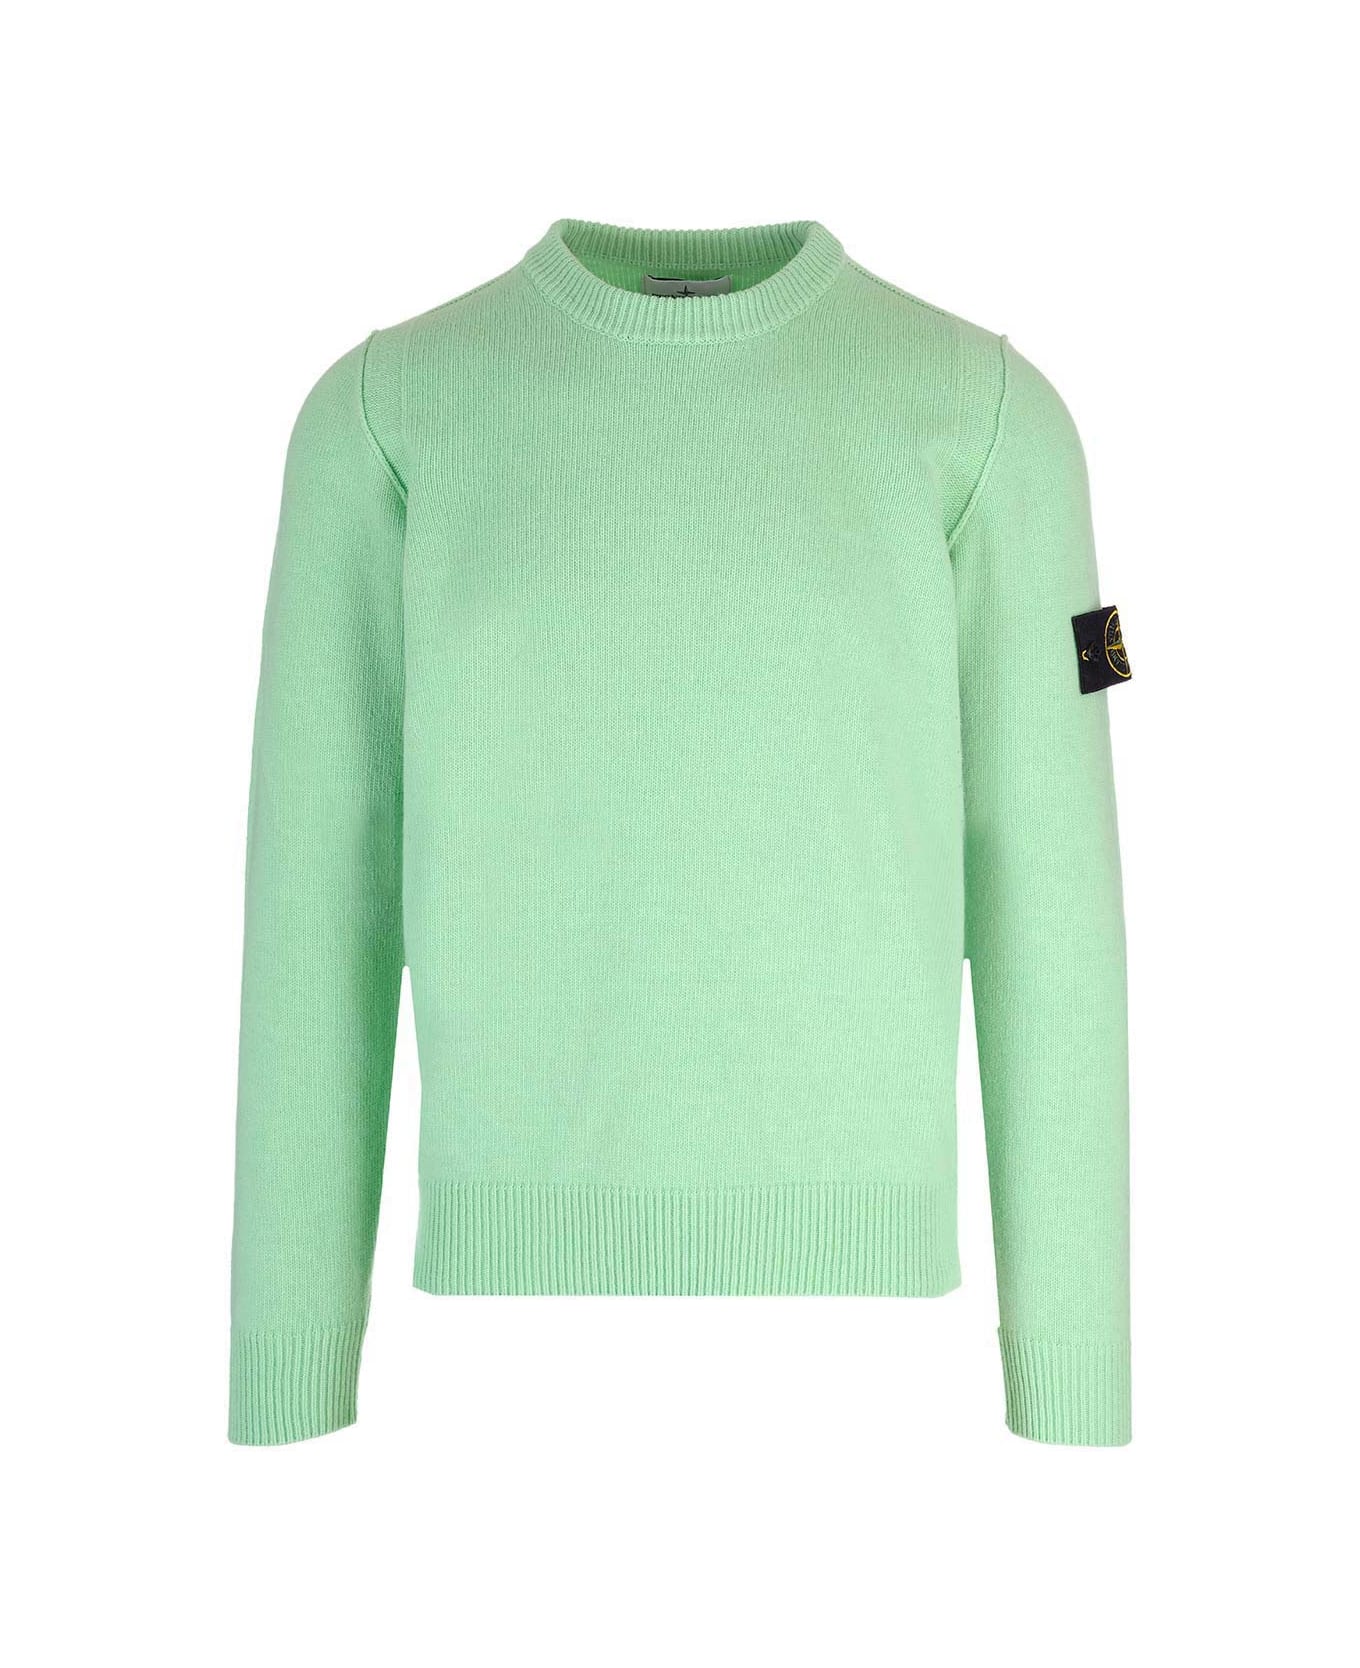 Stone Island Crew-neck Wool Sweater - green ニットウェア